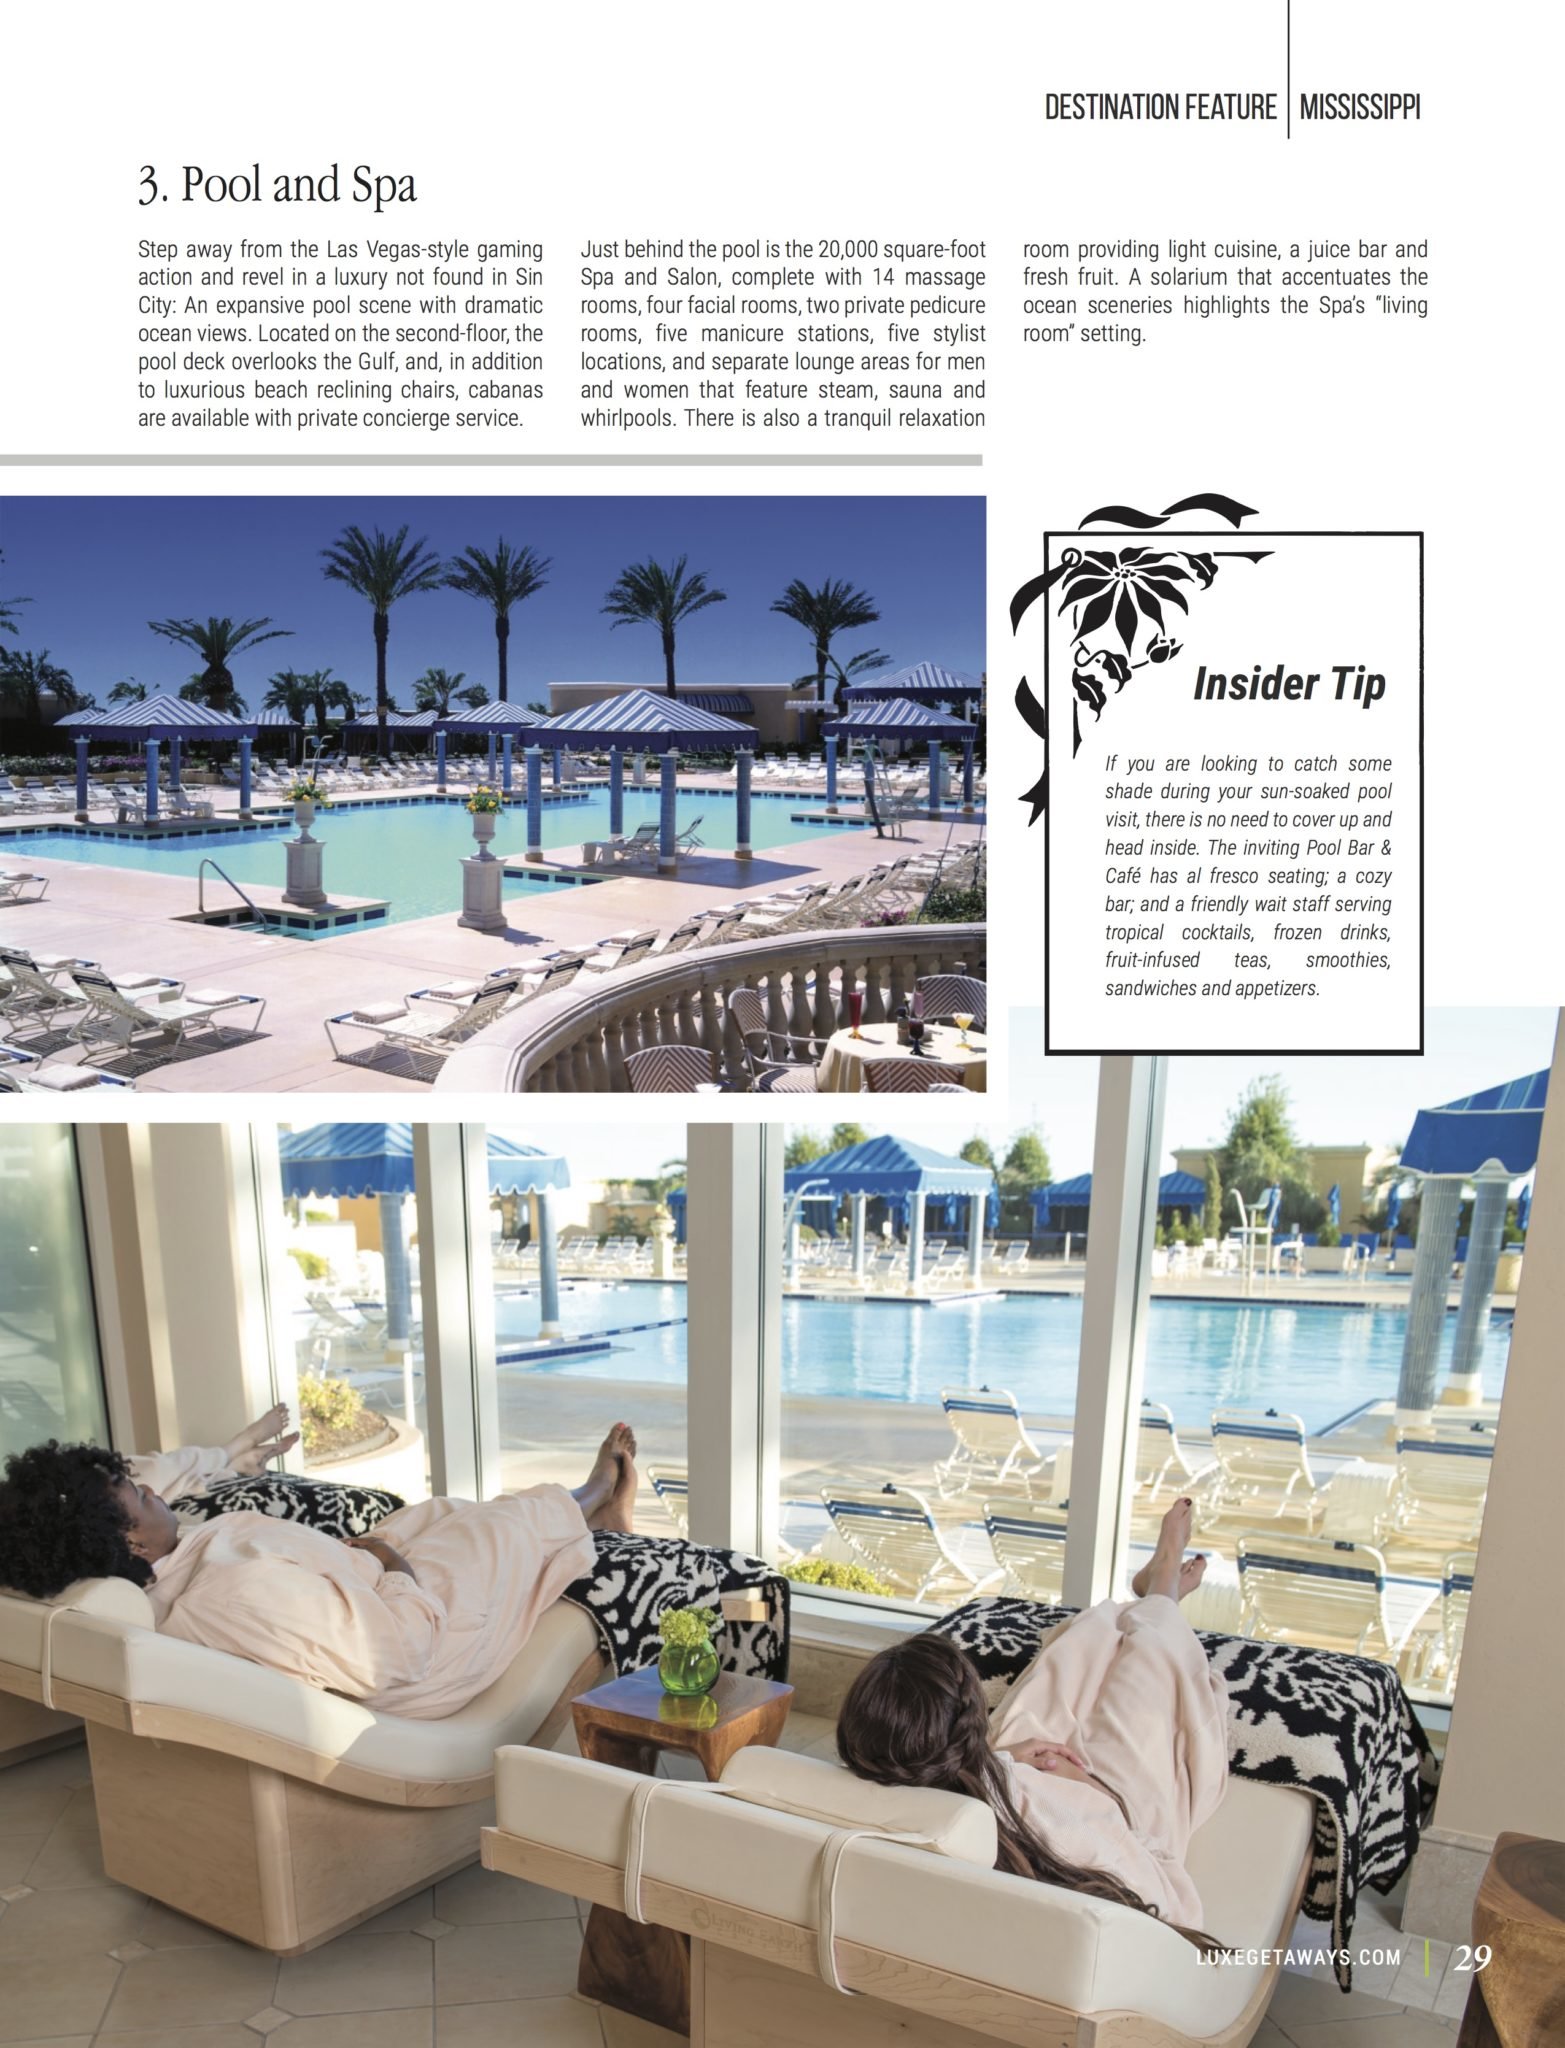 LuxeGetaways - Luxury Travel - Luxury Travel Magazine - Luxe Getaways - Luxury Lifestyle - Fall/Winter 2017 Magazine Issue - Digital Magazine - Travel Magazine - Beau Rivage - Casino - Golf